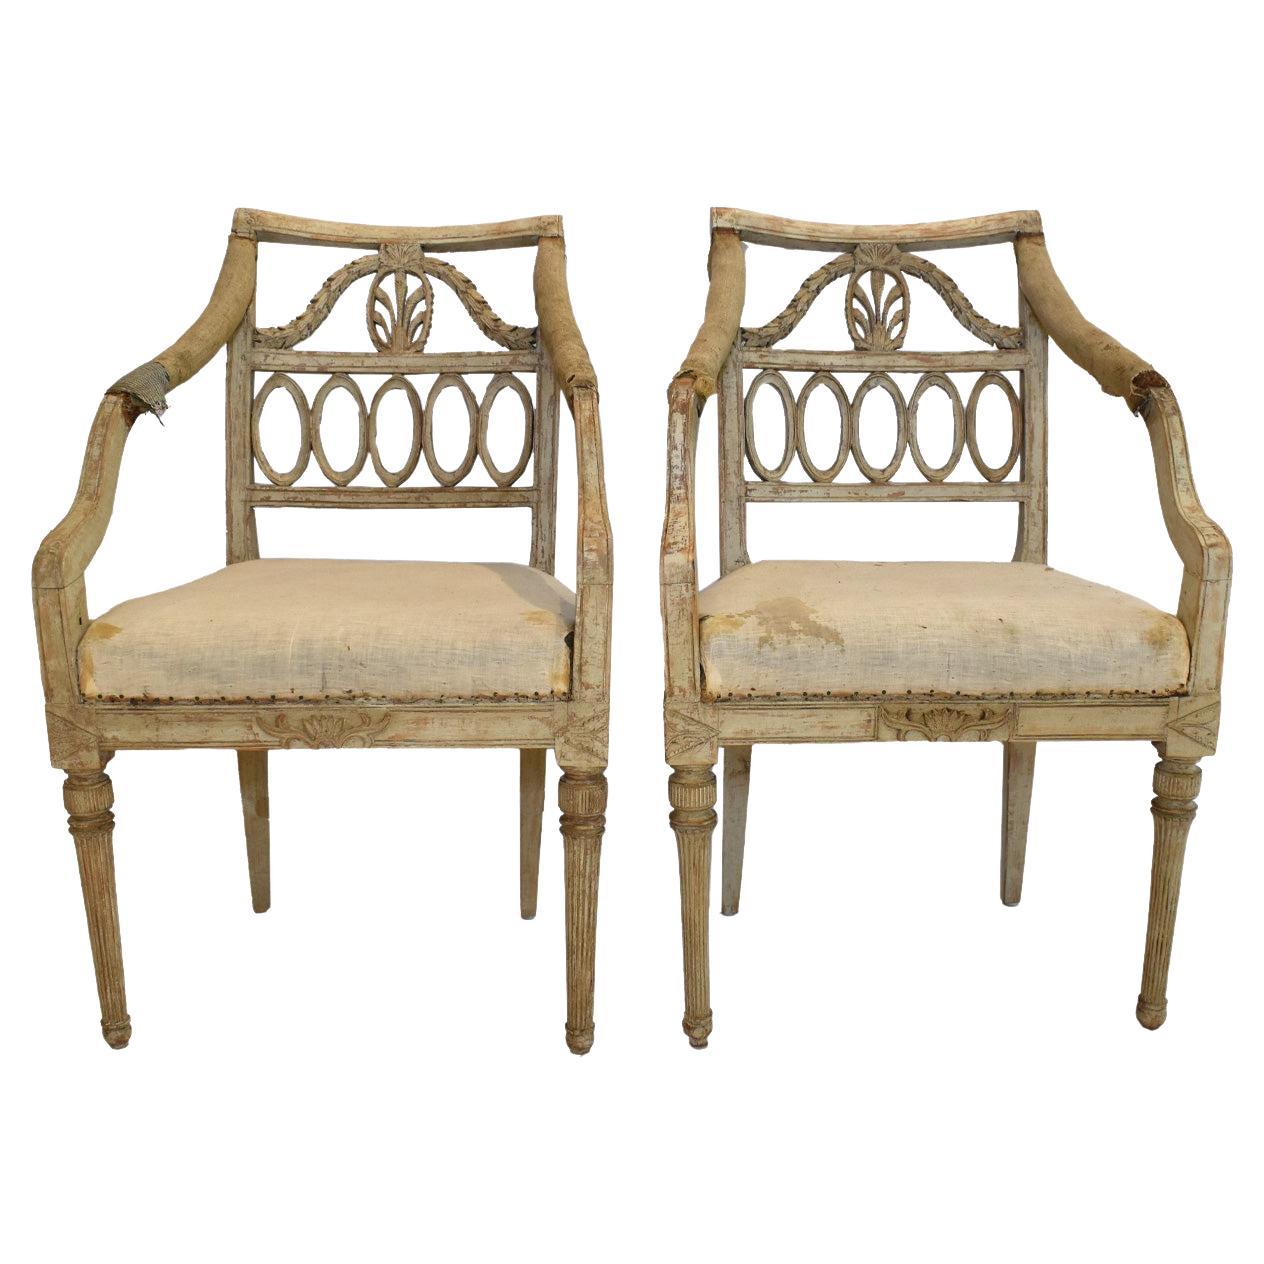 Pair of Chairs, Swedish Armchairs, 18th Century